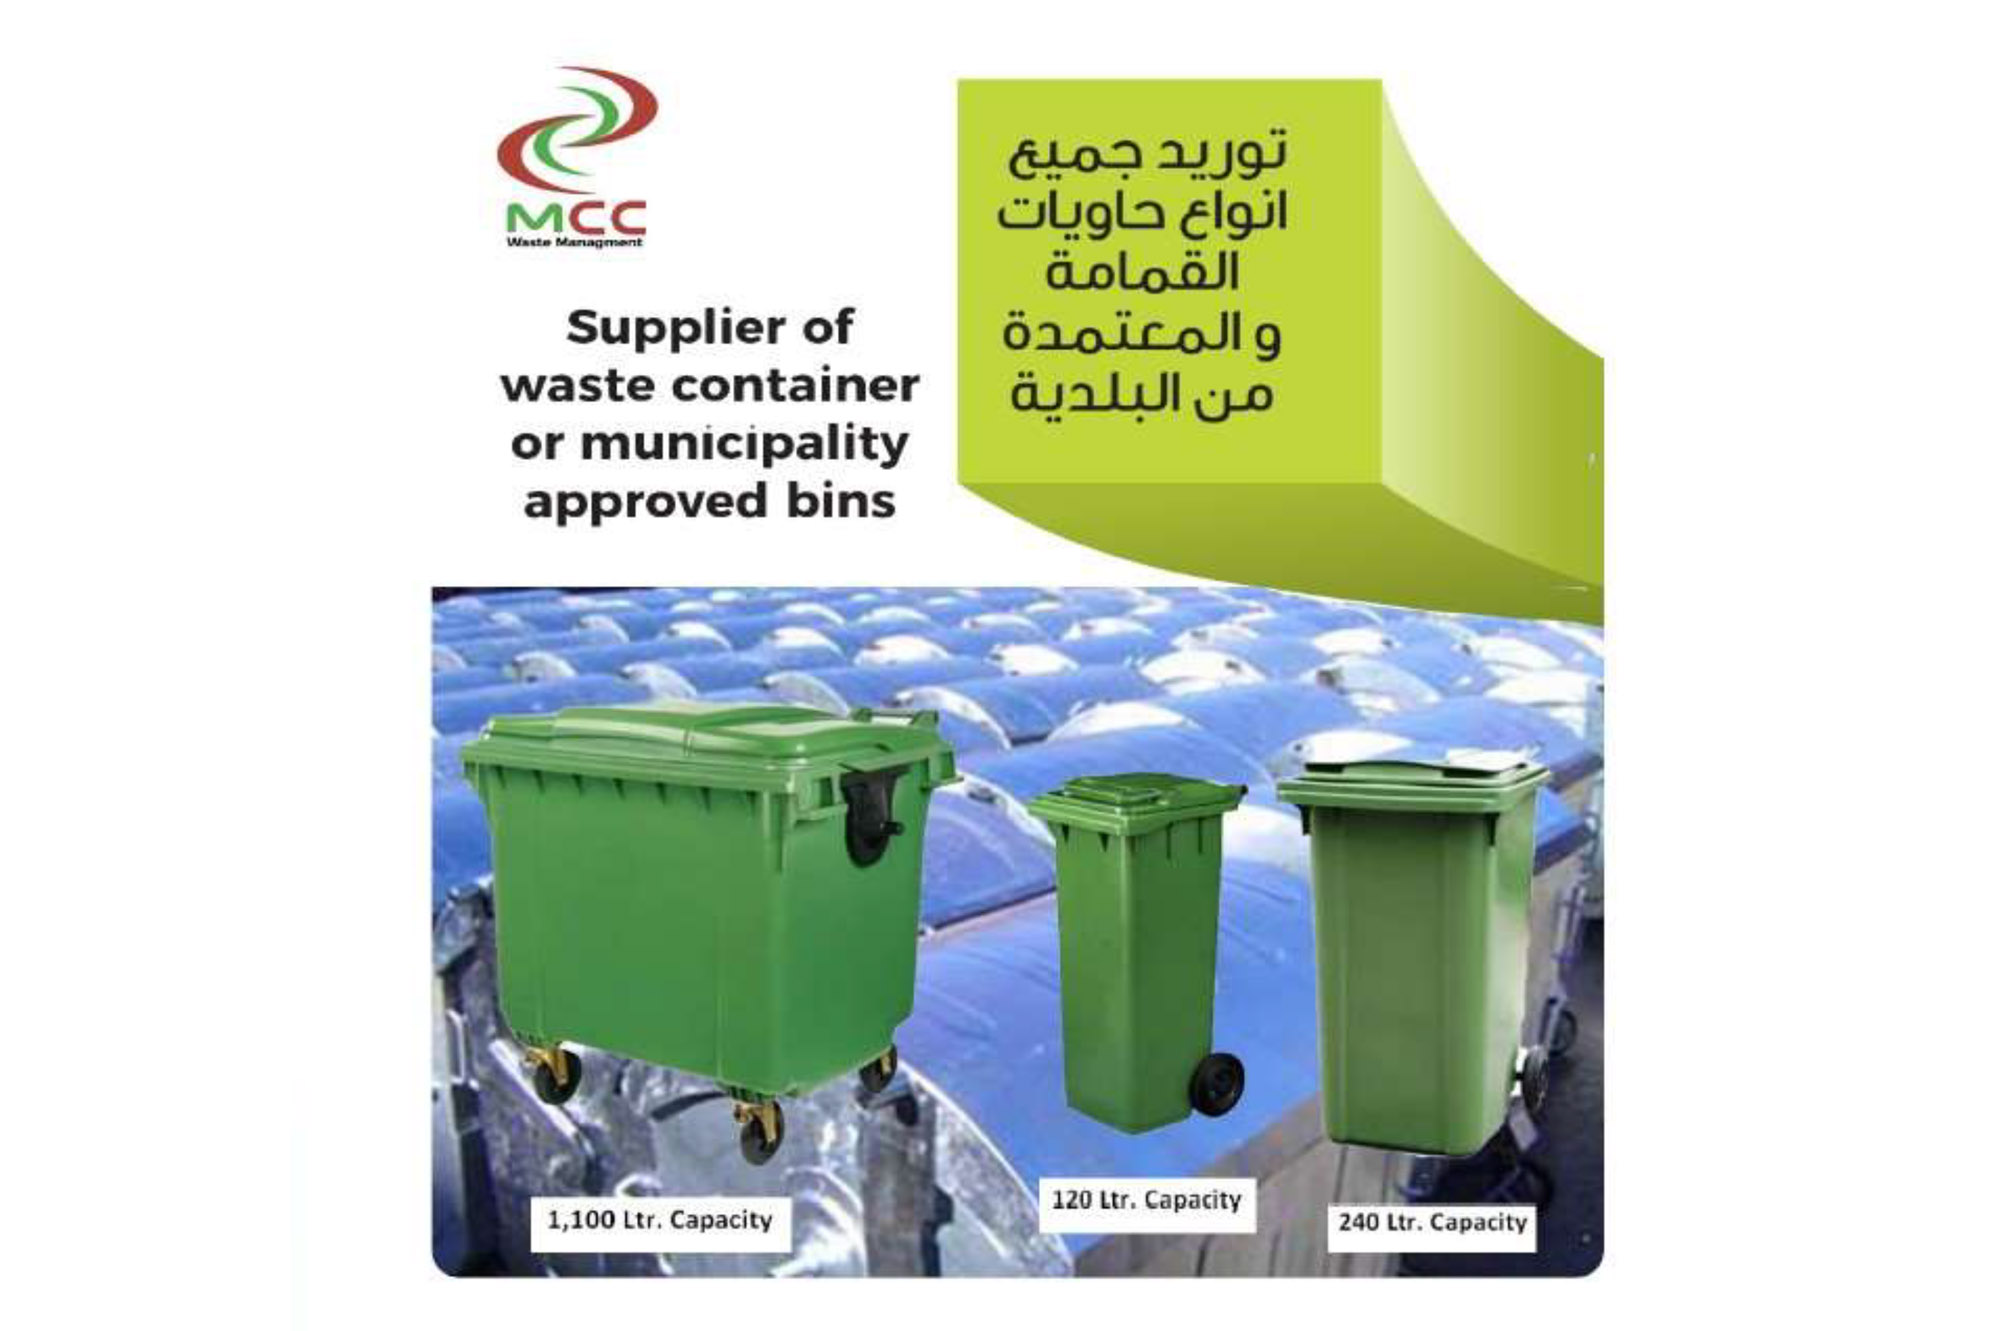 garbage bin supplier in Qatar | Qatar modern cleaning and waste management company MCC Qatar is the leading Waste Management companies in Qatar recycling | qatar waste management companies | manage of waste in Qatar